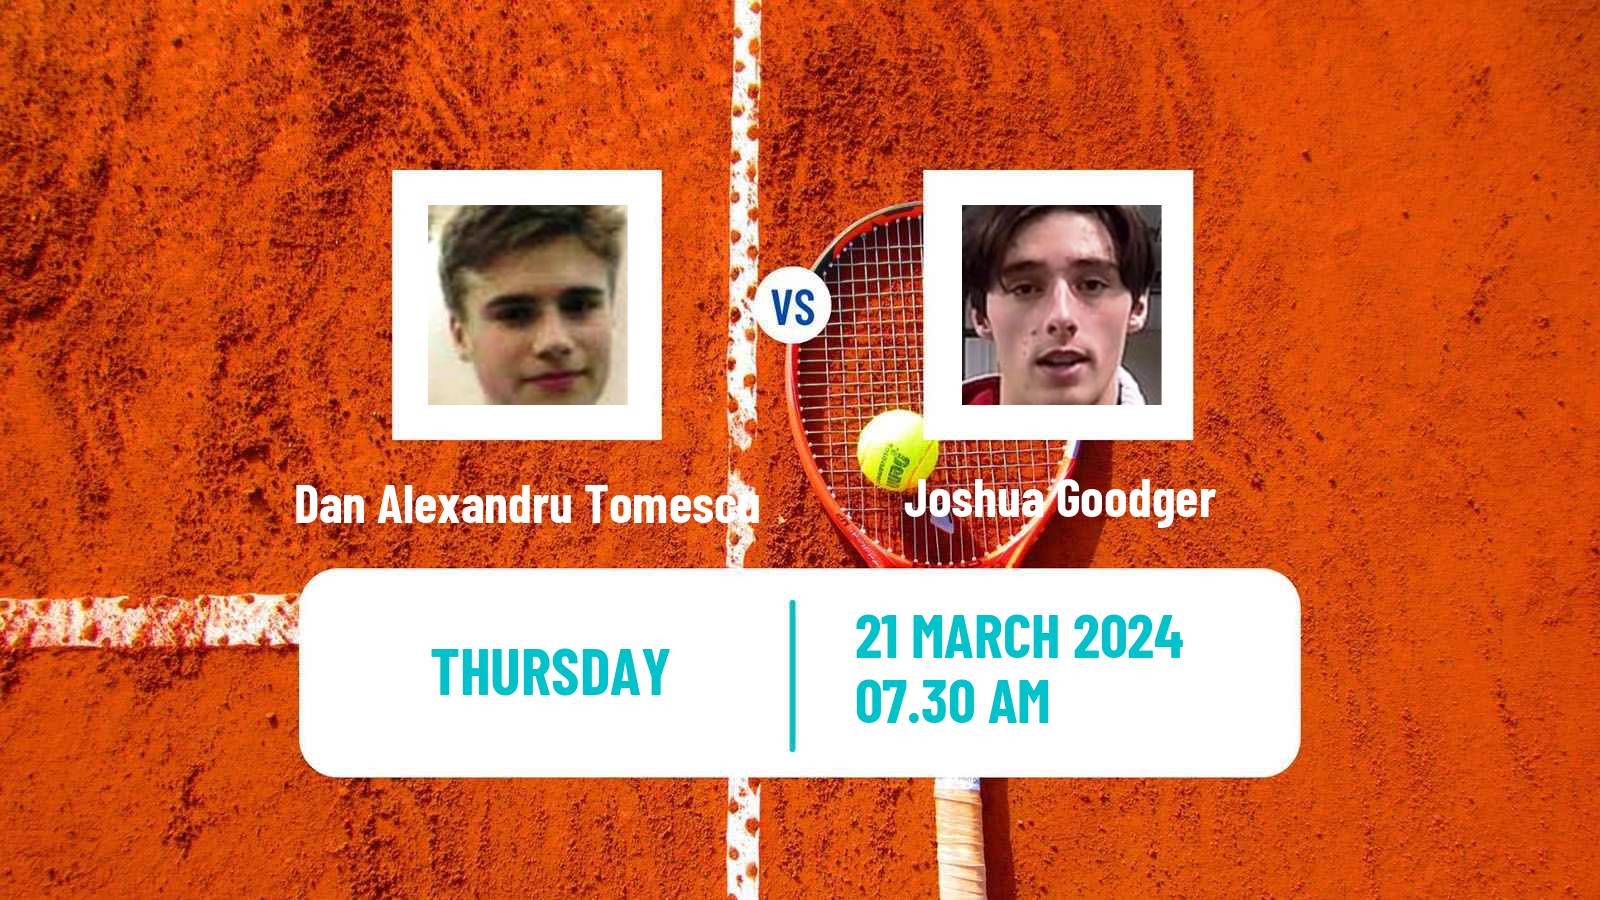 Tennis ITF M15 Alaminos Larnaca 2 Men Dan Alexandru Tomescu - Joshua Goodger